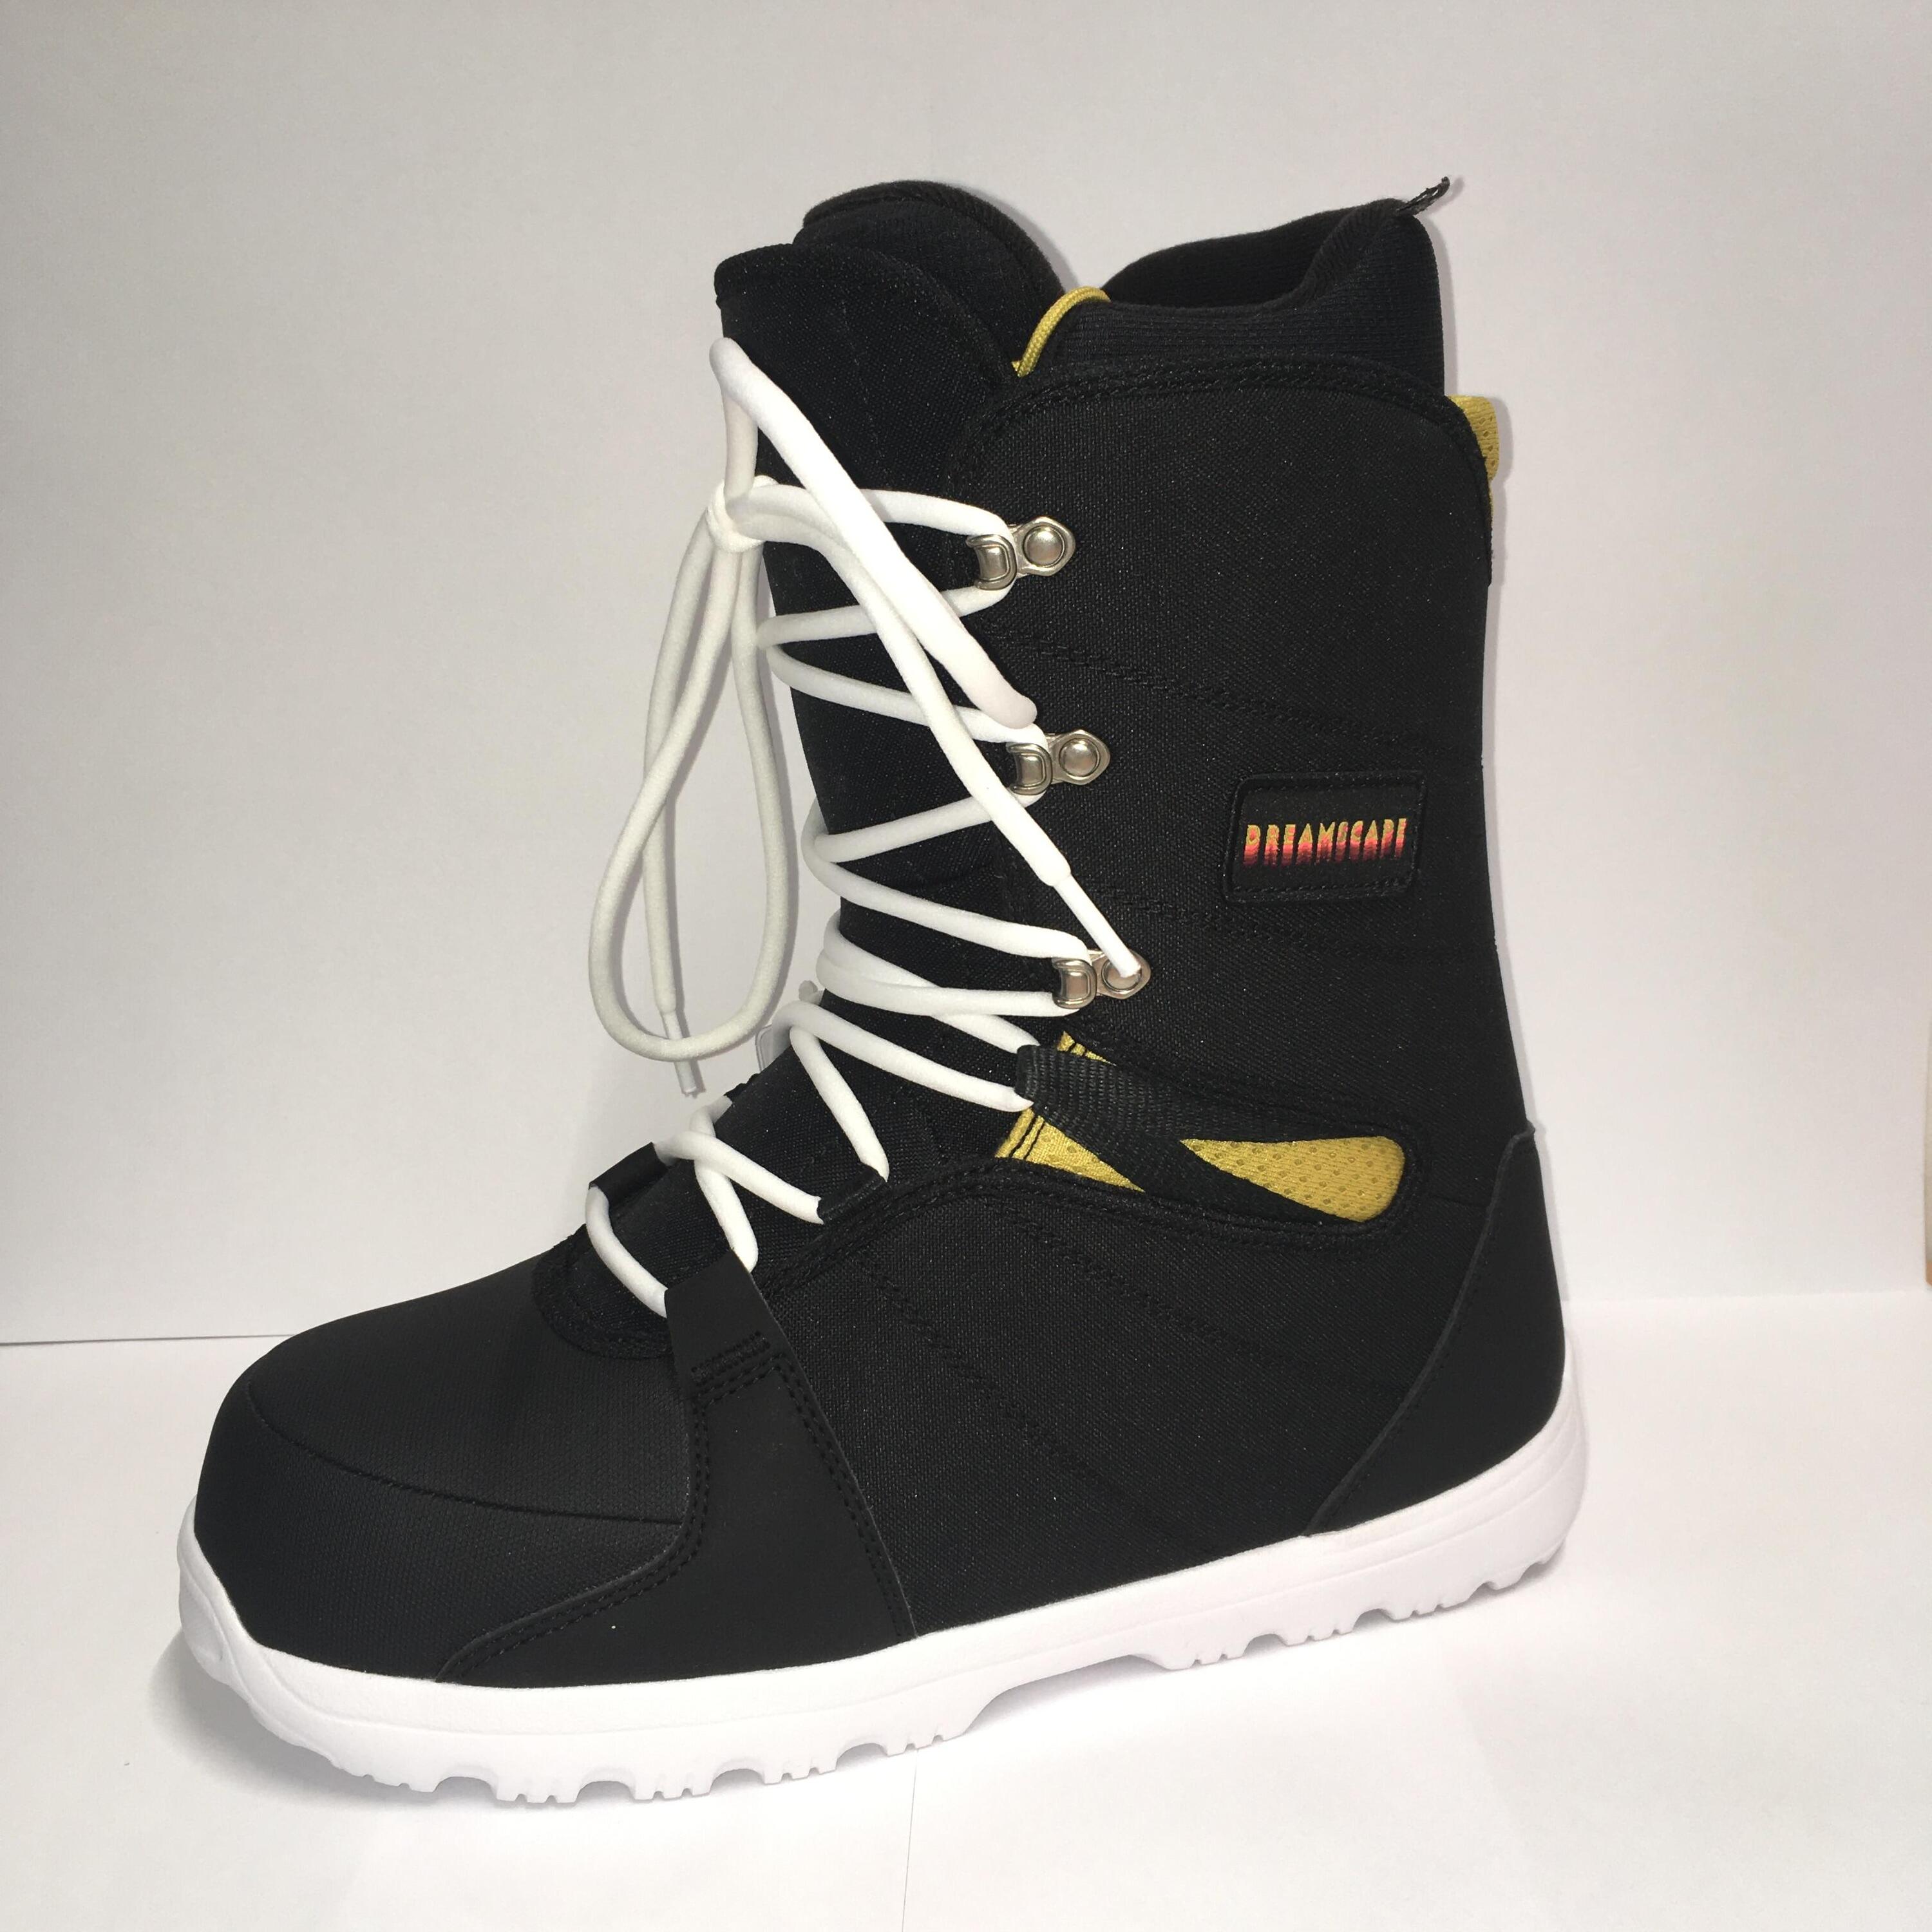 Men’s Beginner Snowboard Boots SNB 100 - Black 2/13